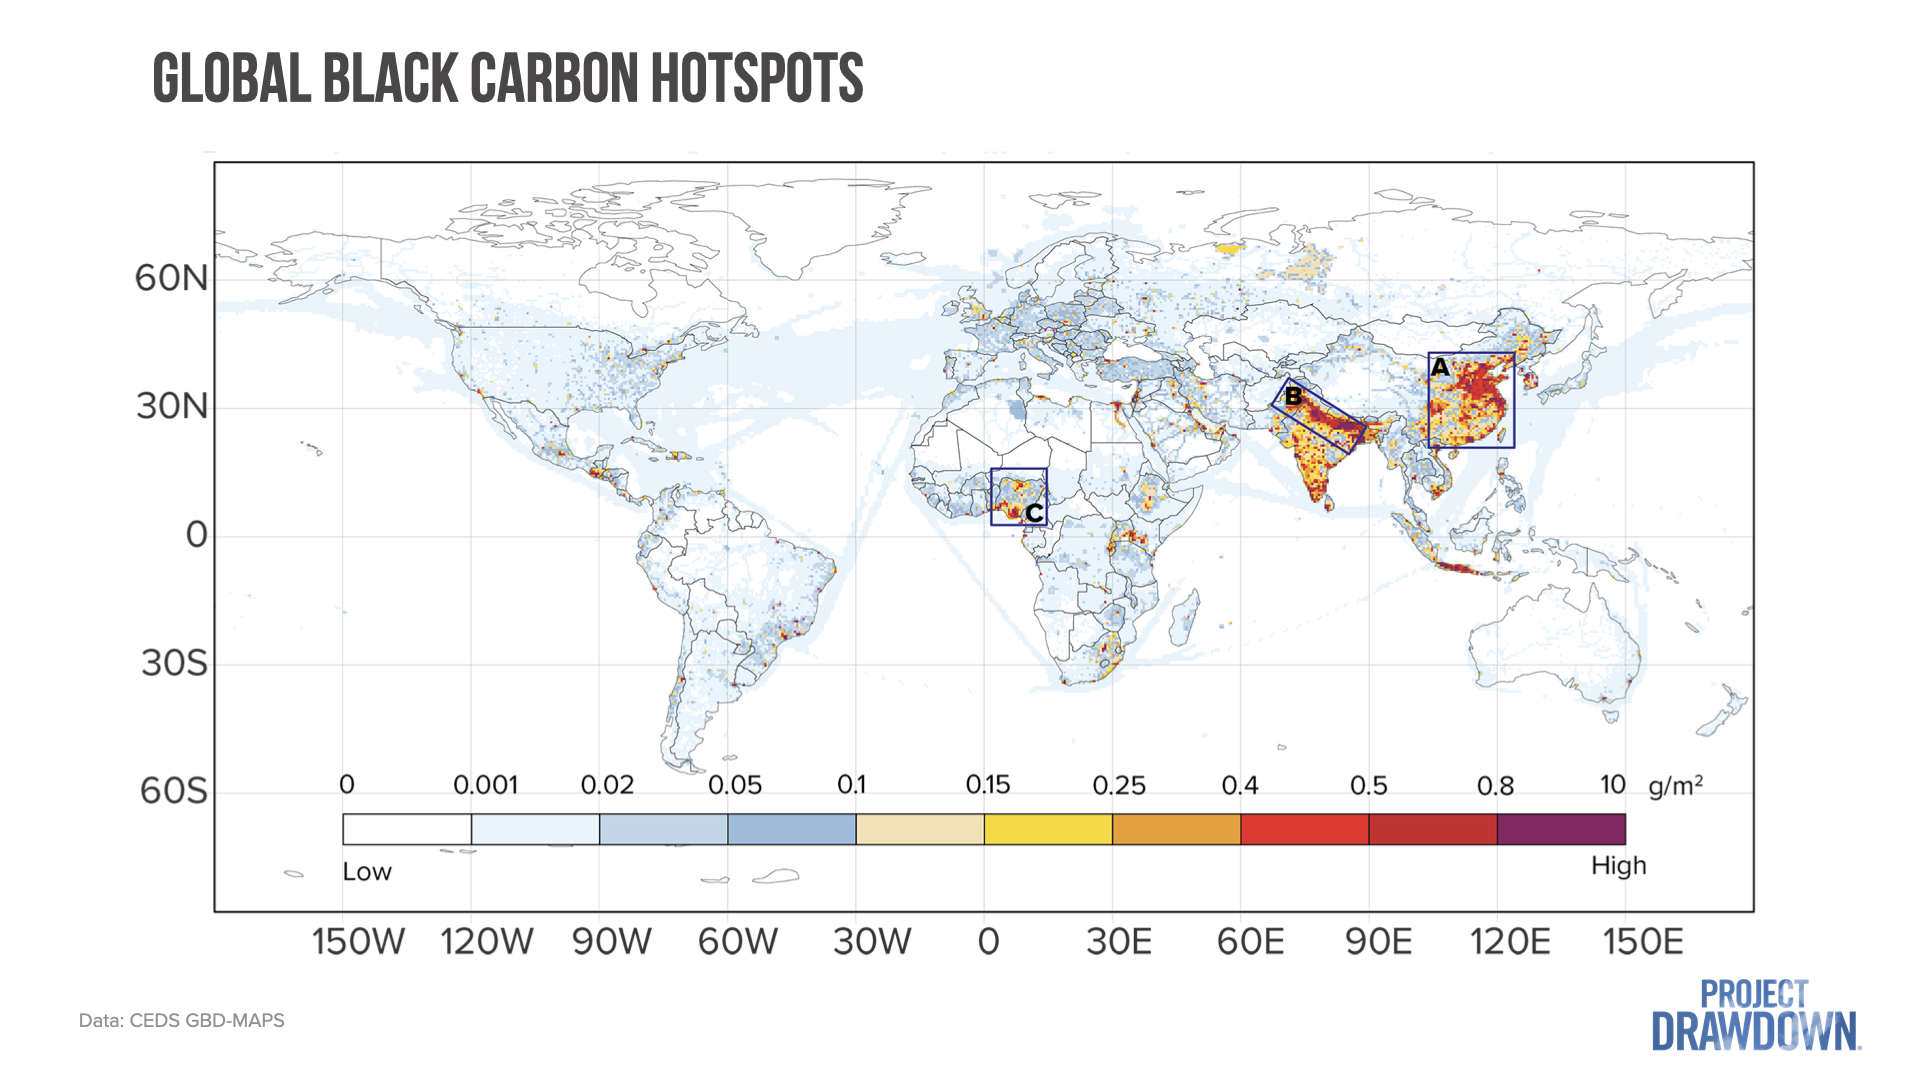 A map showing global black carbon hotspots